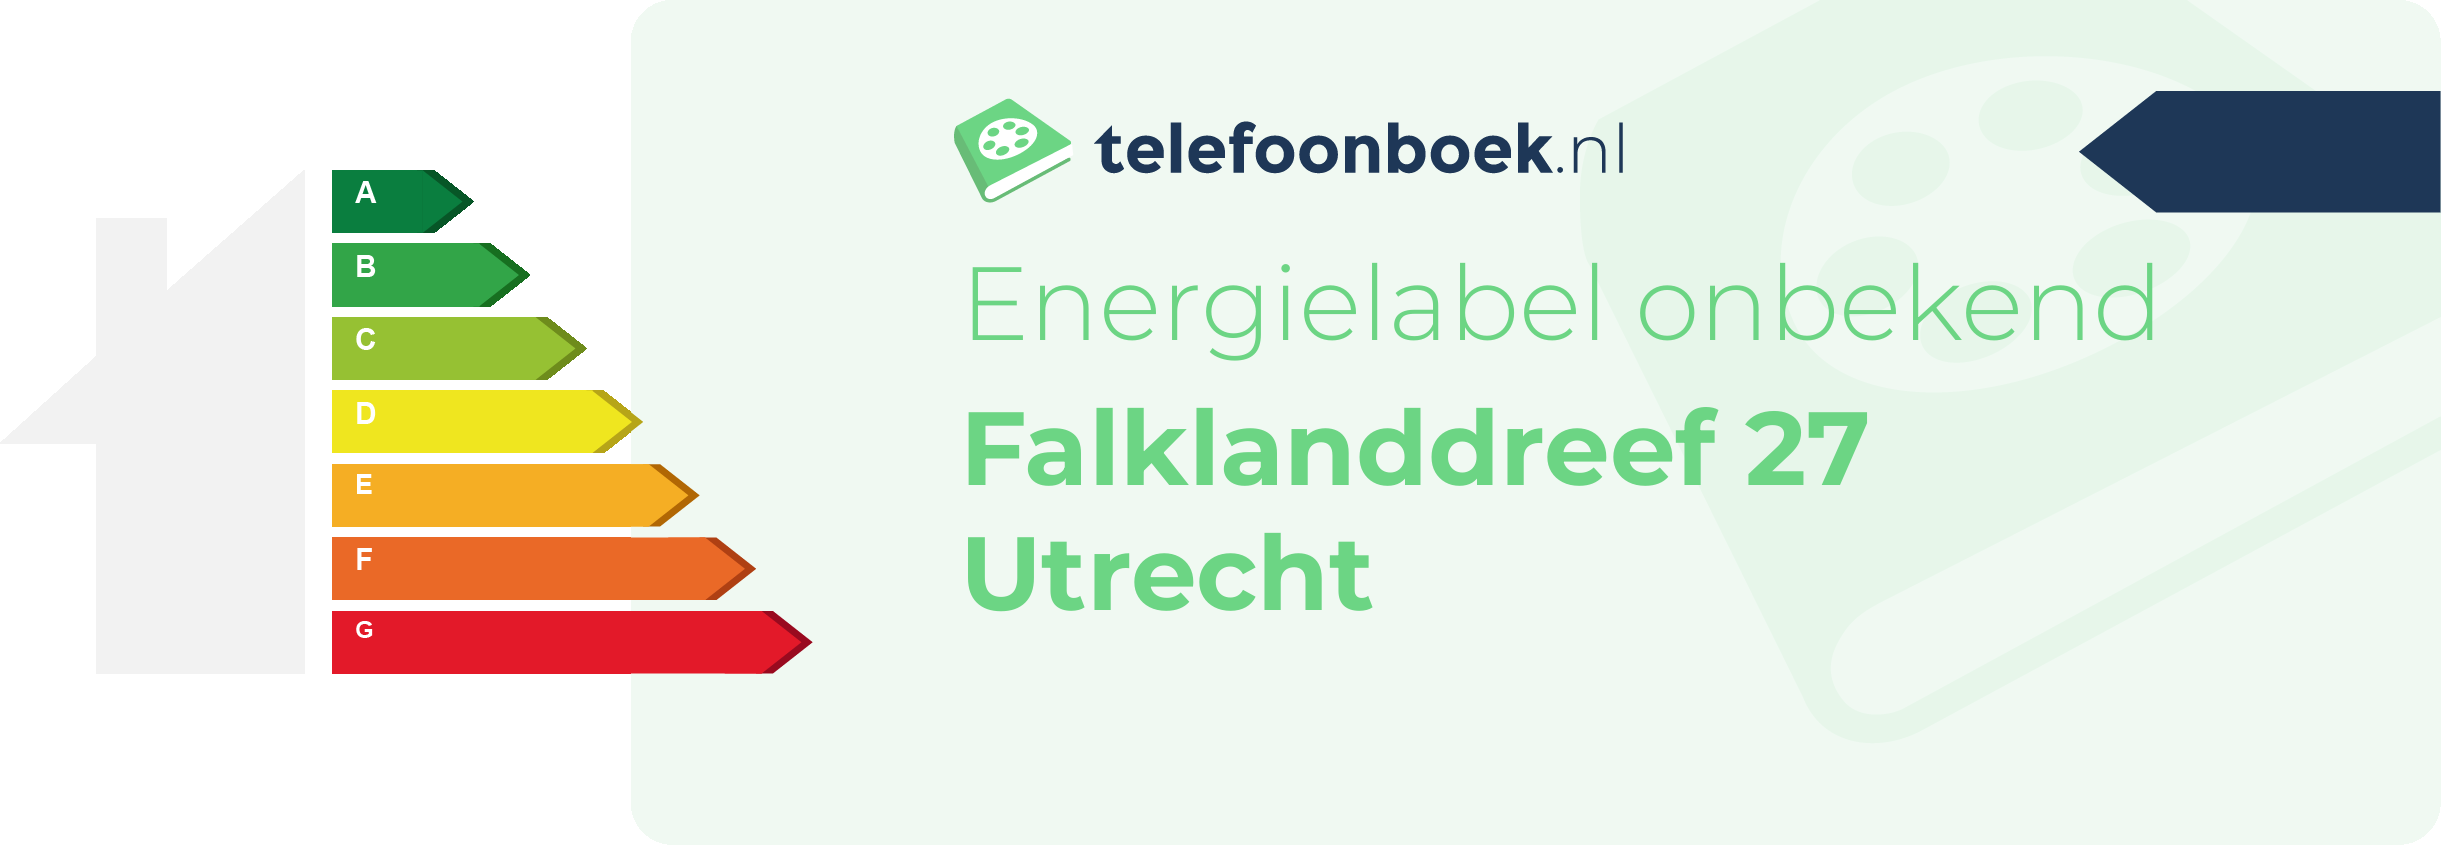 Energielabel Falklanddreef 27 Utrecht